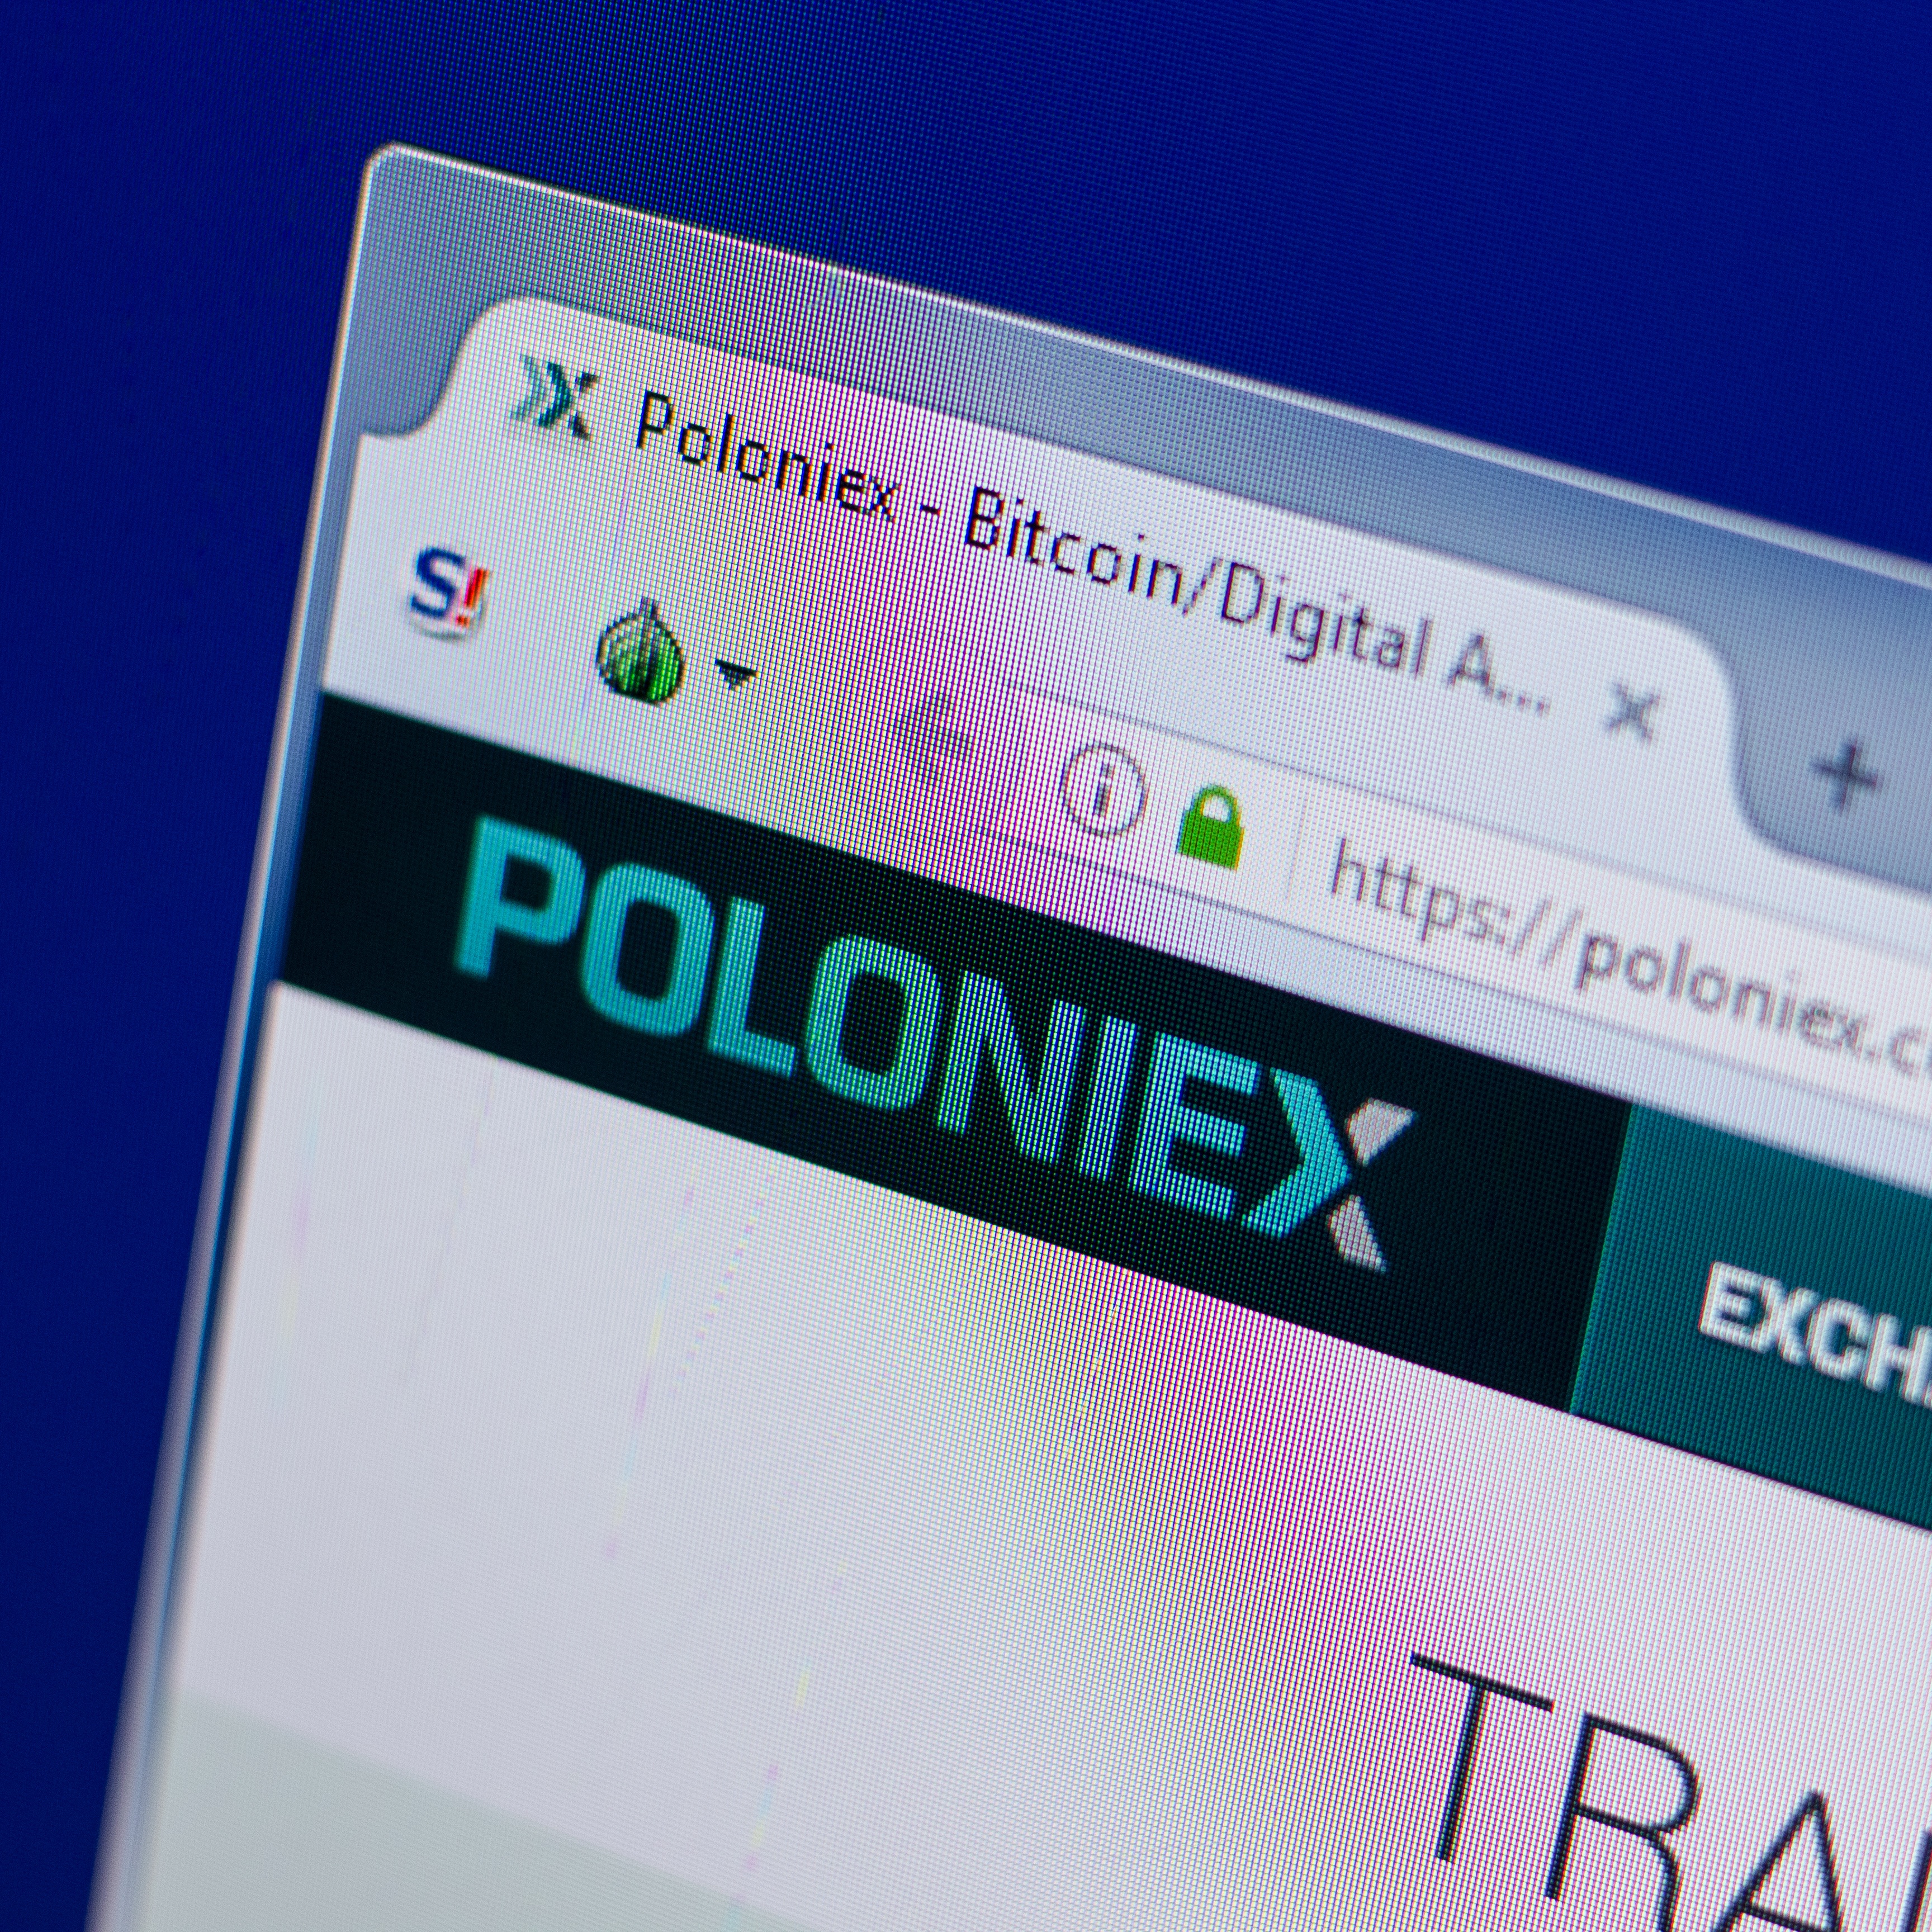 The Daily: Poloniex Goes Mobile, Cobinhood Adds USD Fiat, Bitmain Expands